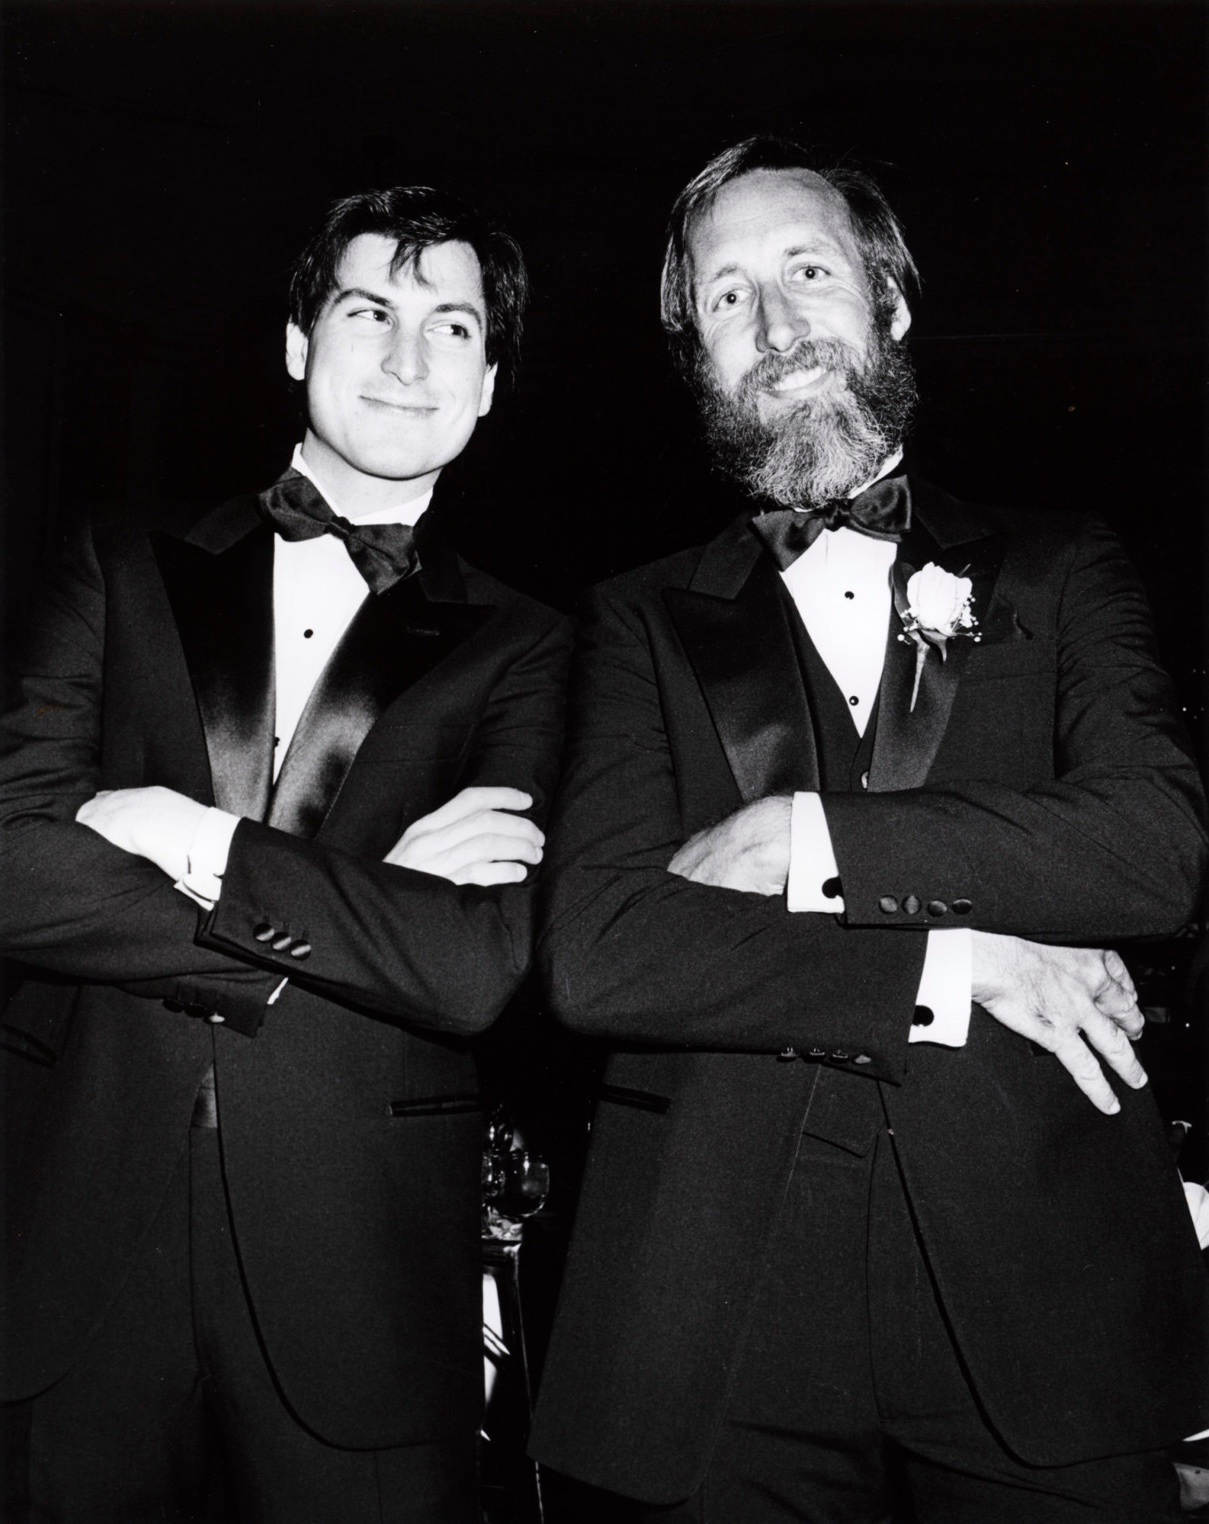 Steve Jobs with Lee Clow, 1984